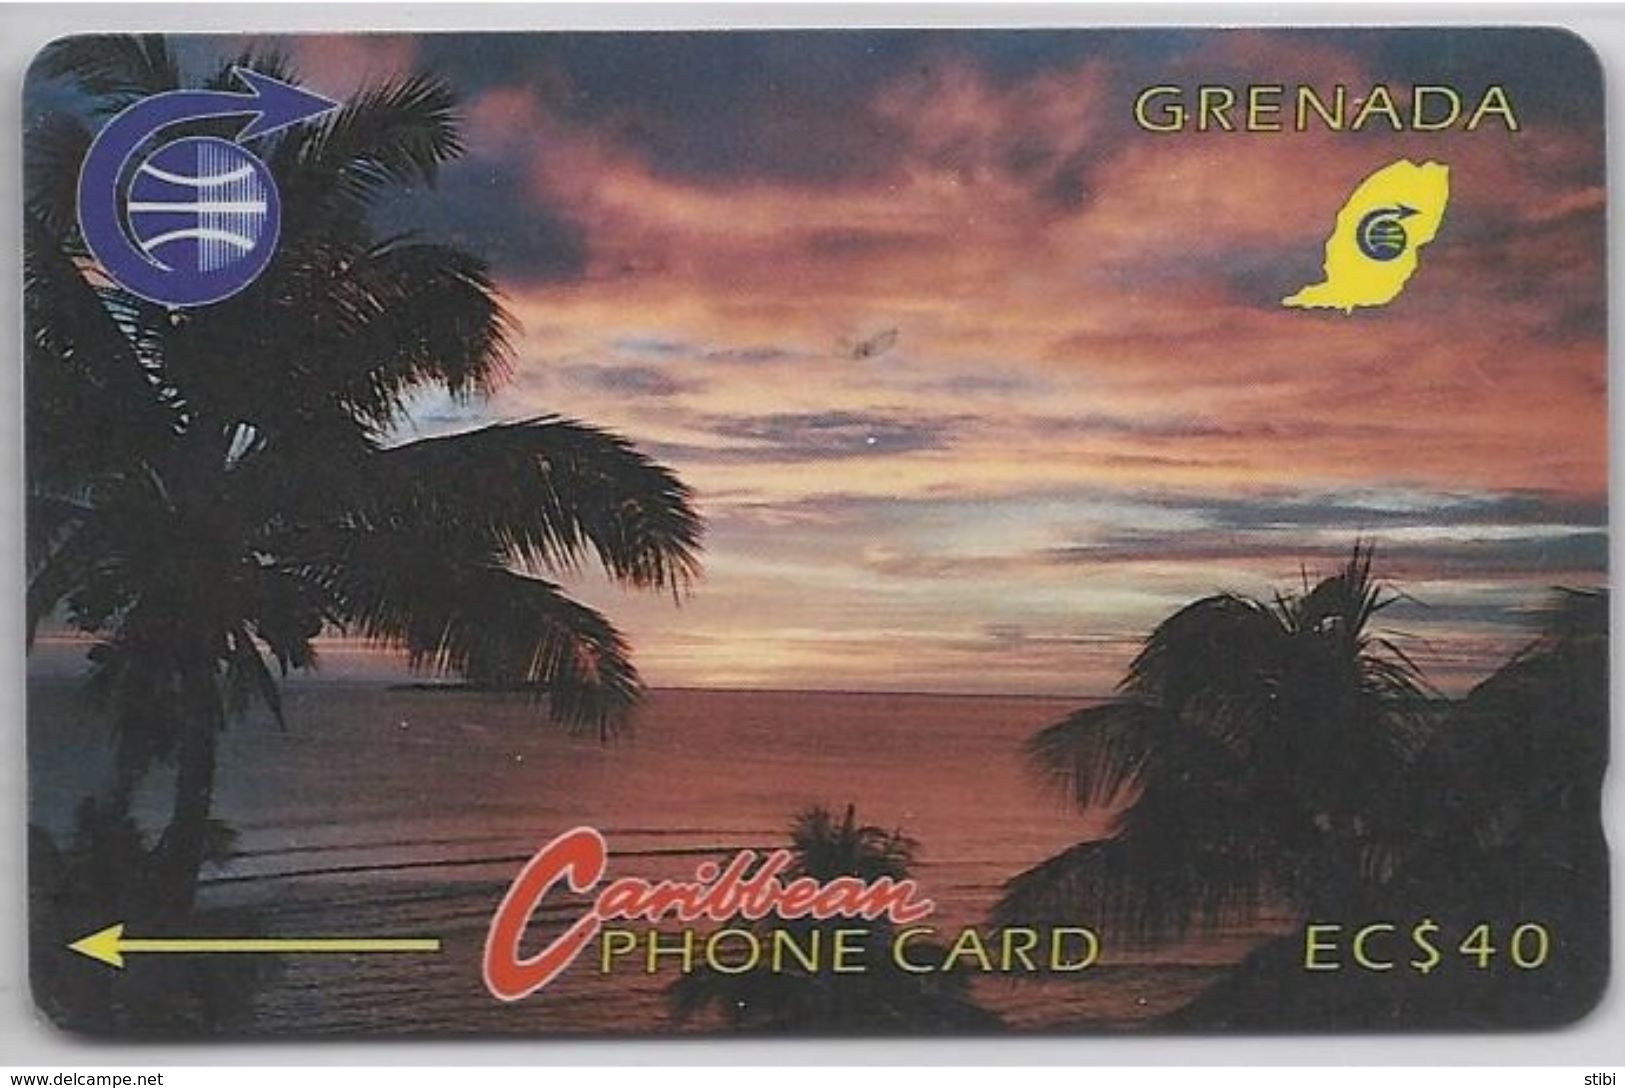 GRENADA - SUNSET - 3CGRB - Grenada